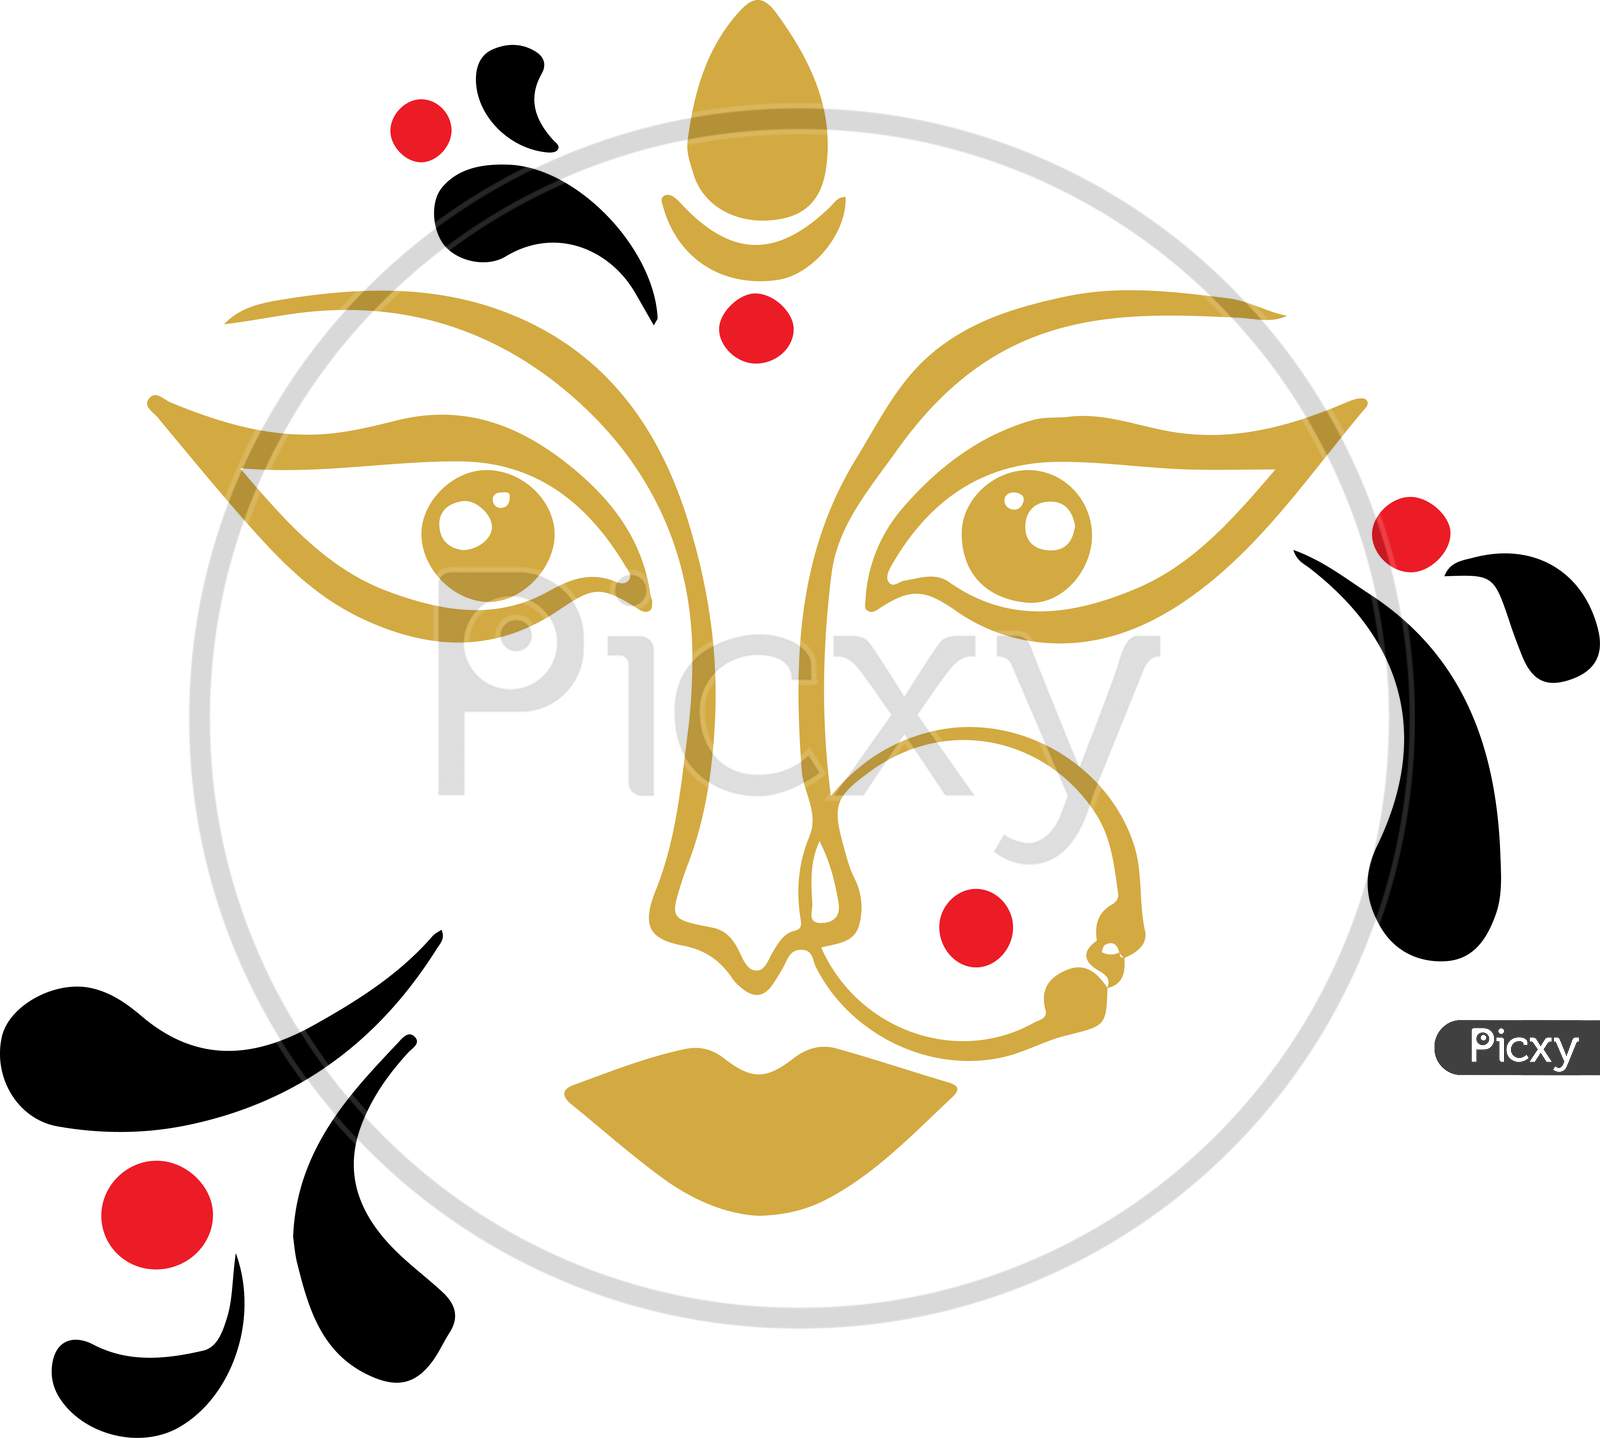 Image of Sketch Of Goddess Durga Maa Or Durga Closeup Face Design Element  In Outline Editable Vector Illustration For A Dasara Festival  CelebrationBB404359Picxy